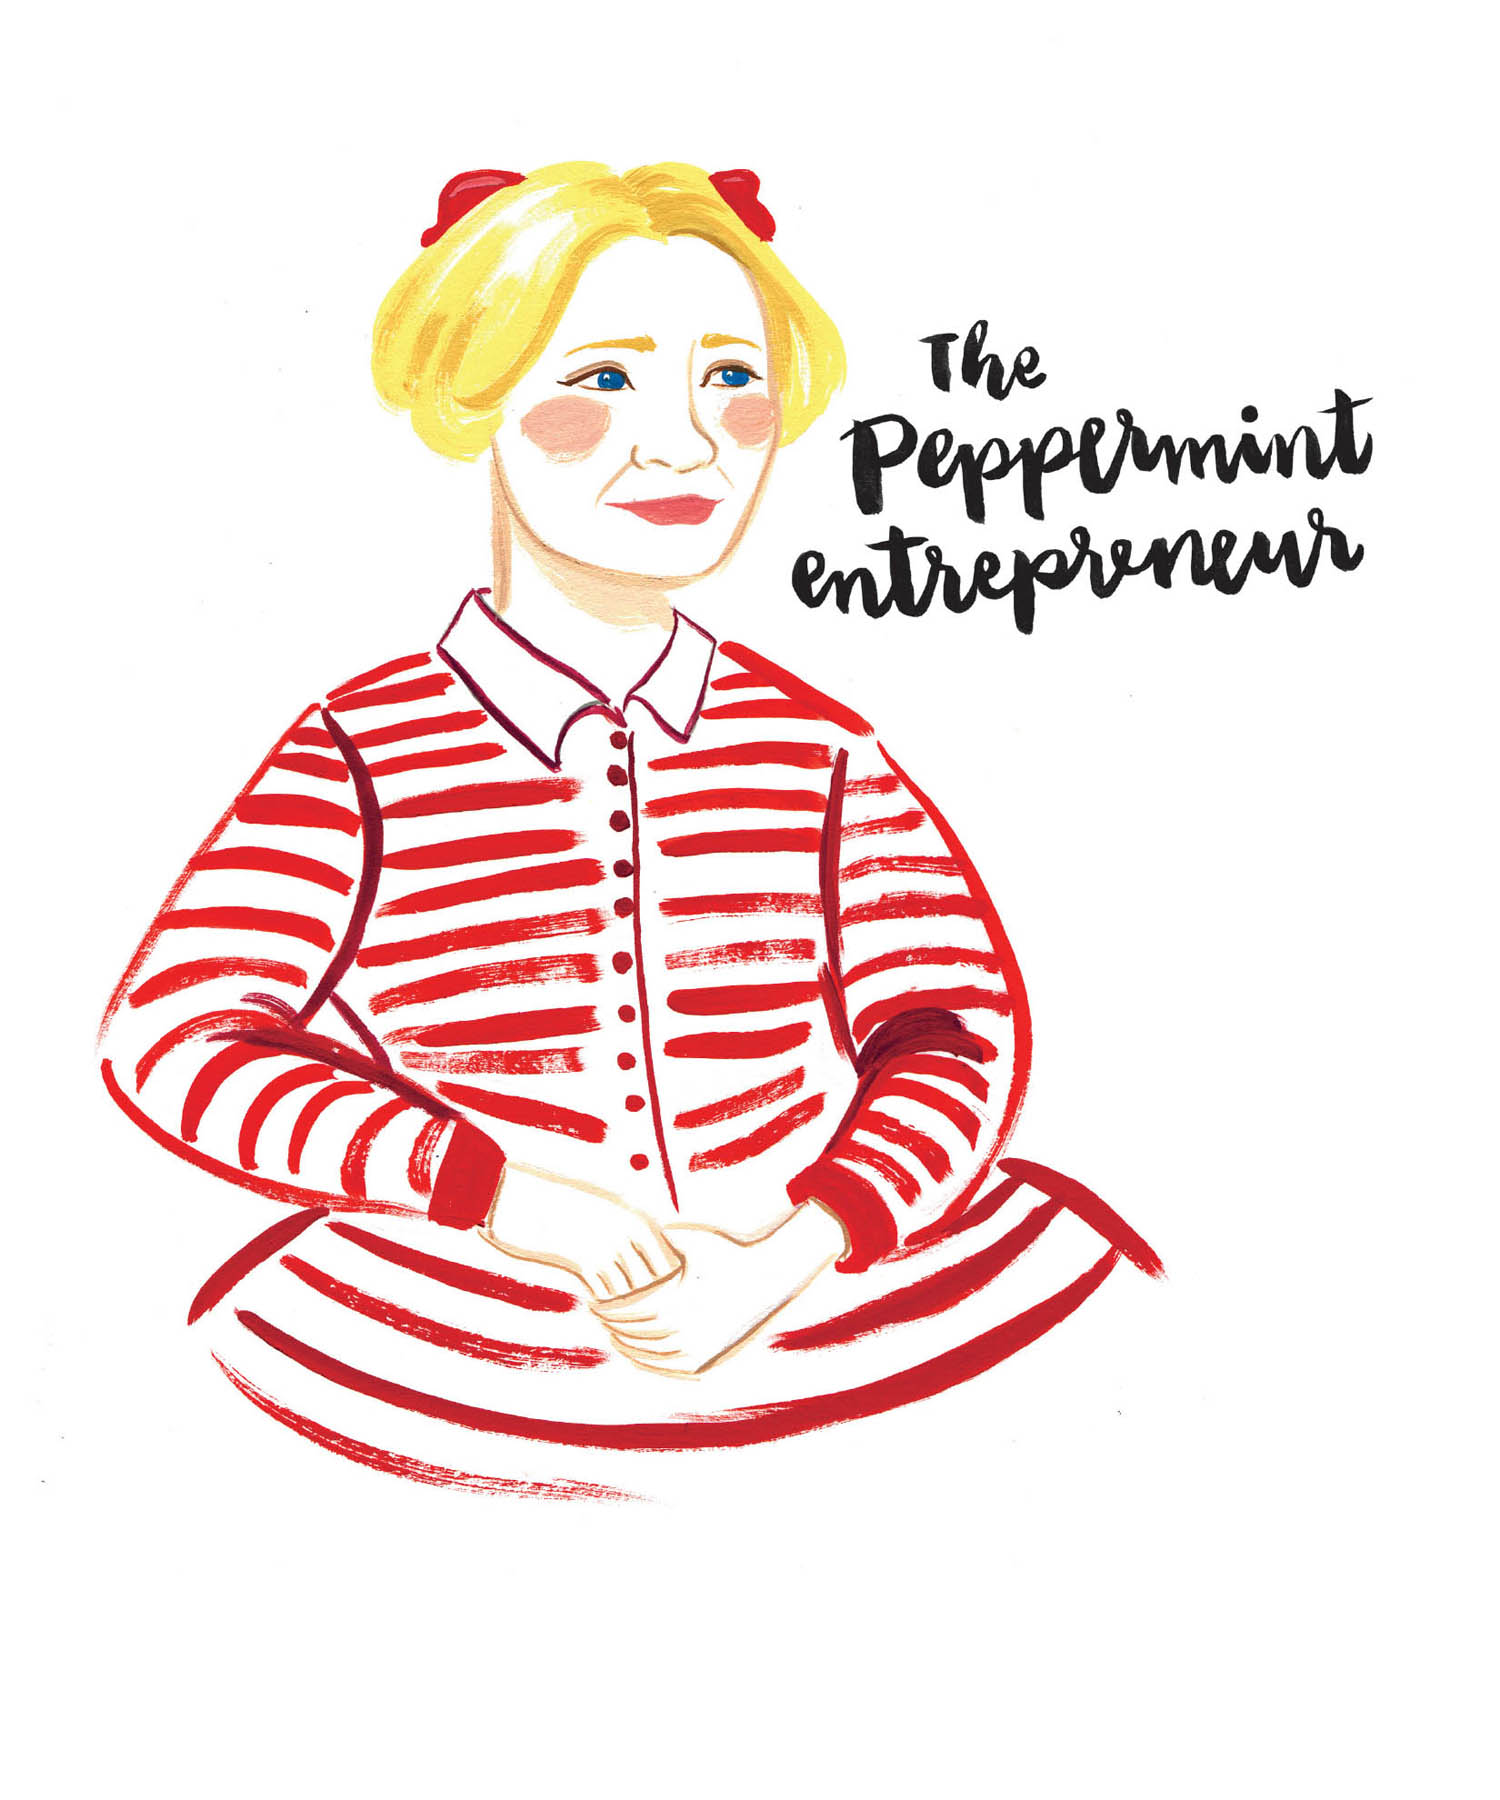 The Peppermint entrepreneur